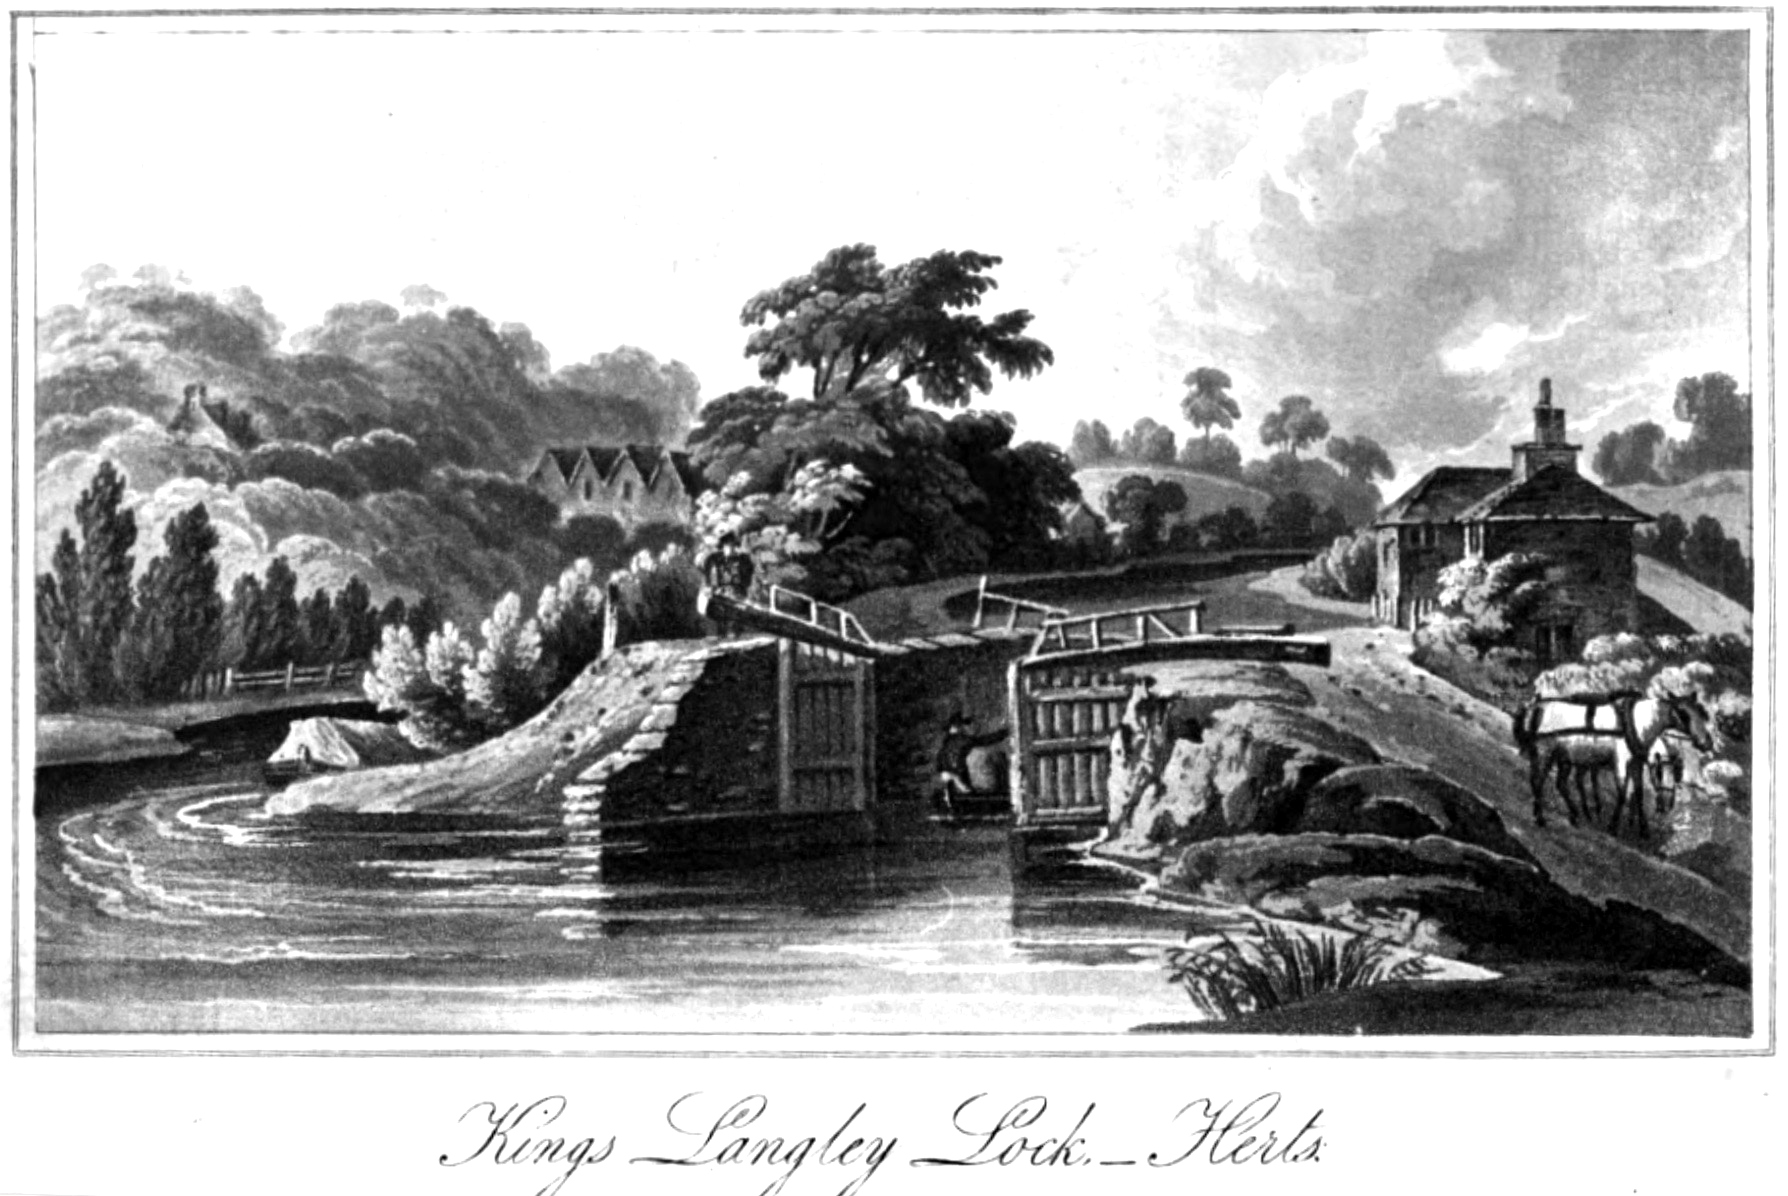 Kings Langley Lock — Herts.